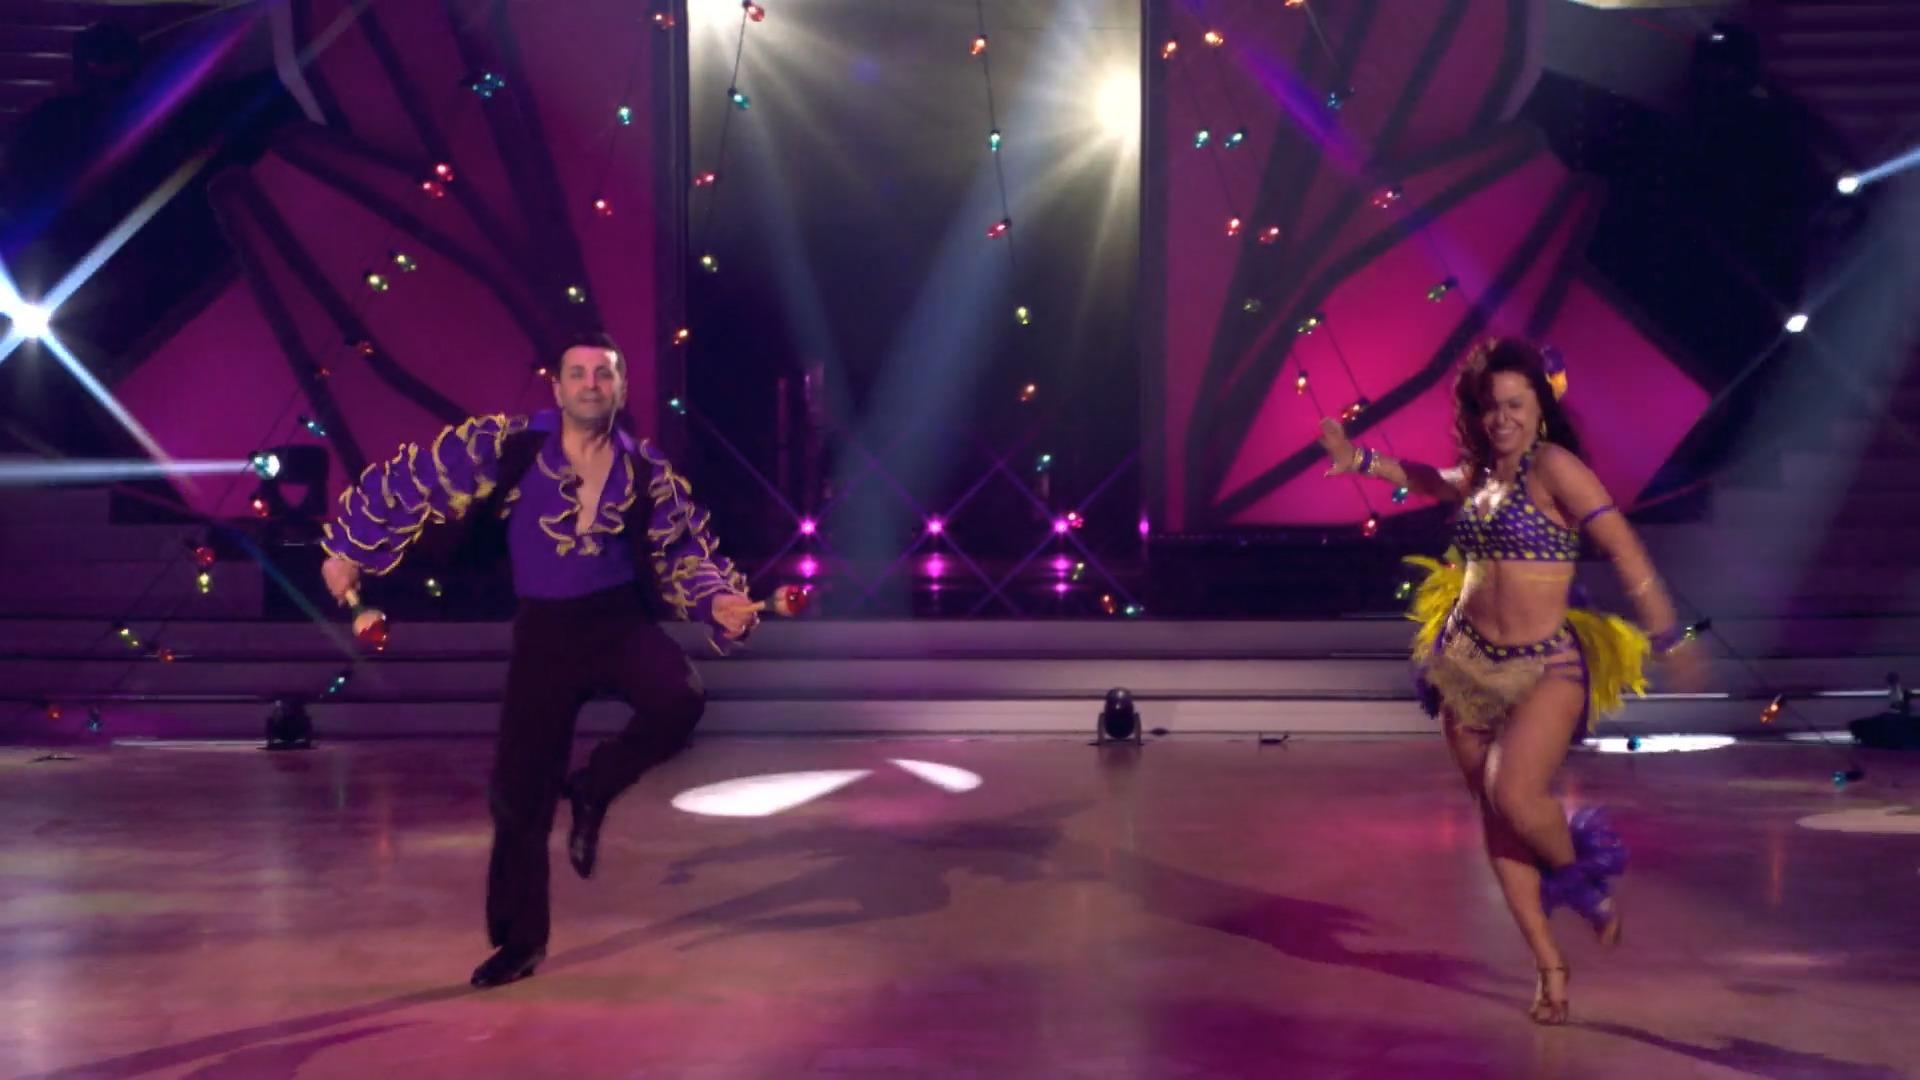 Hier kommt "La Bomba" mit Ali & Christina "Let's Dance"-Samba im Ali-Style